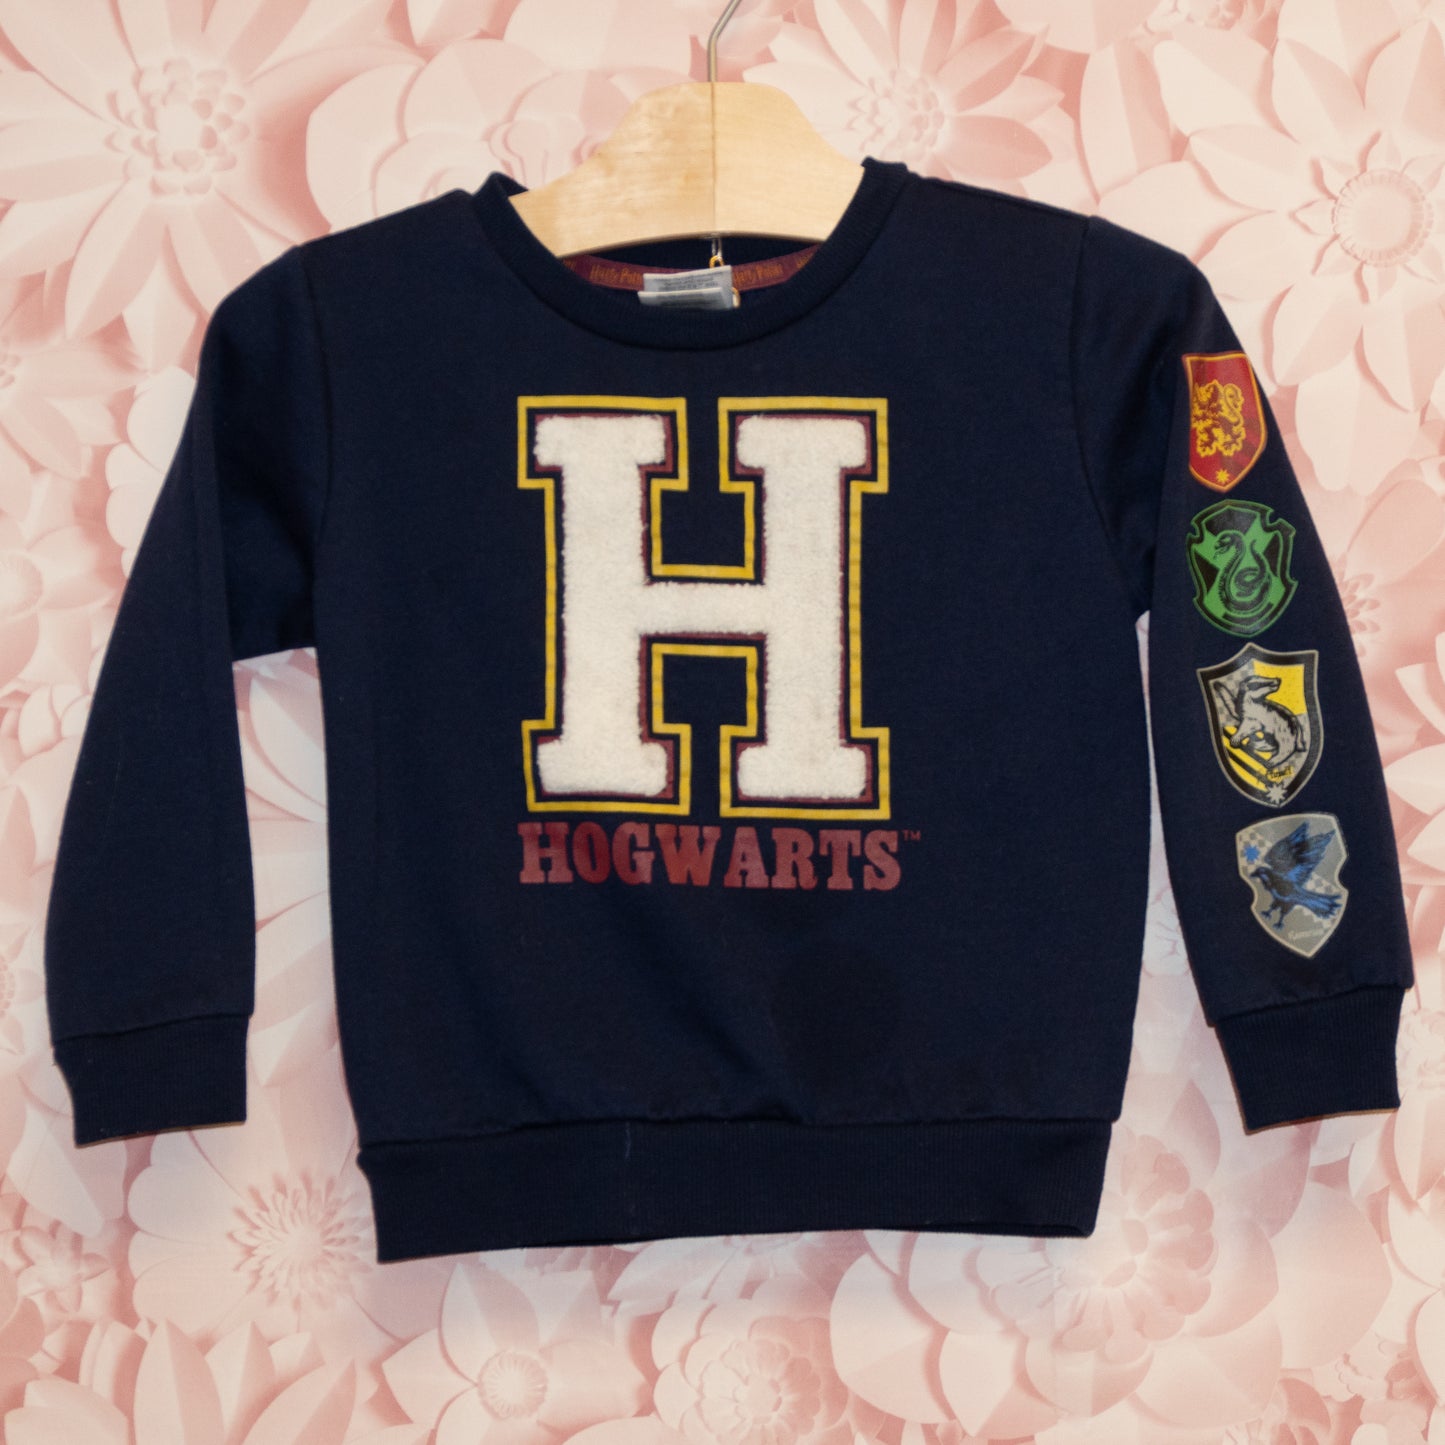 Hogwarts Sweatshirt Size 4T